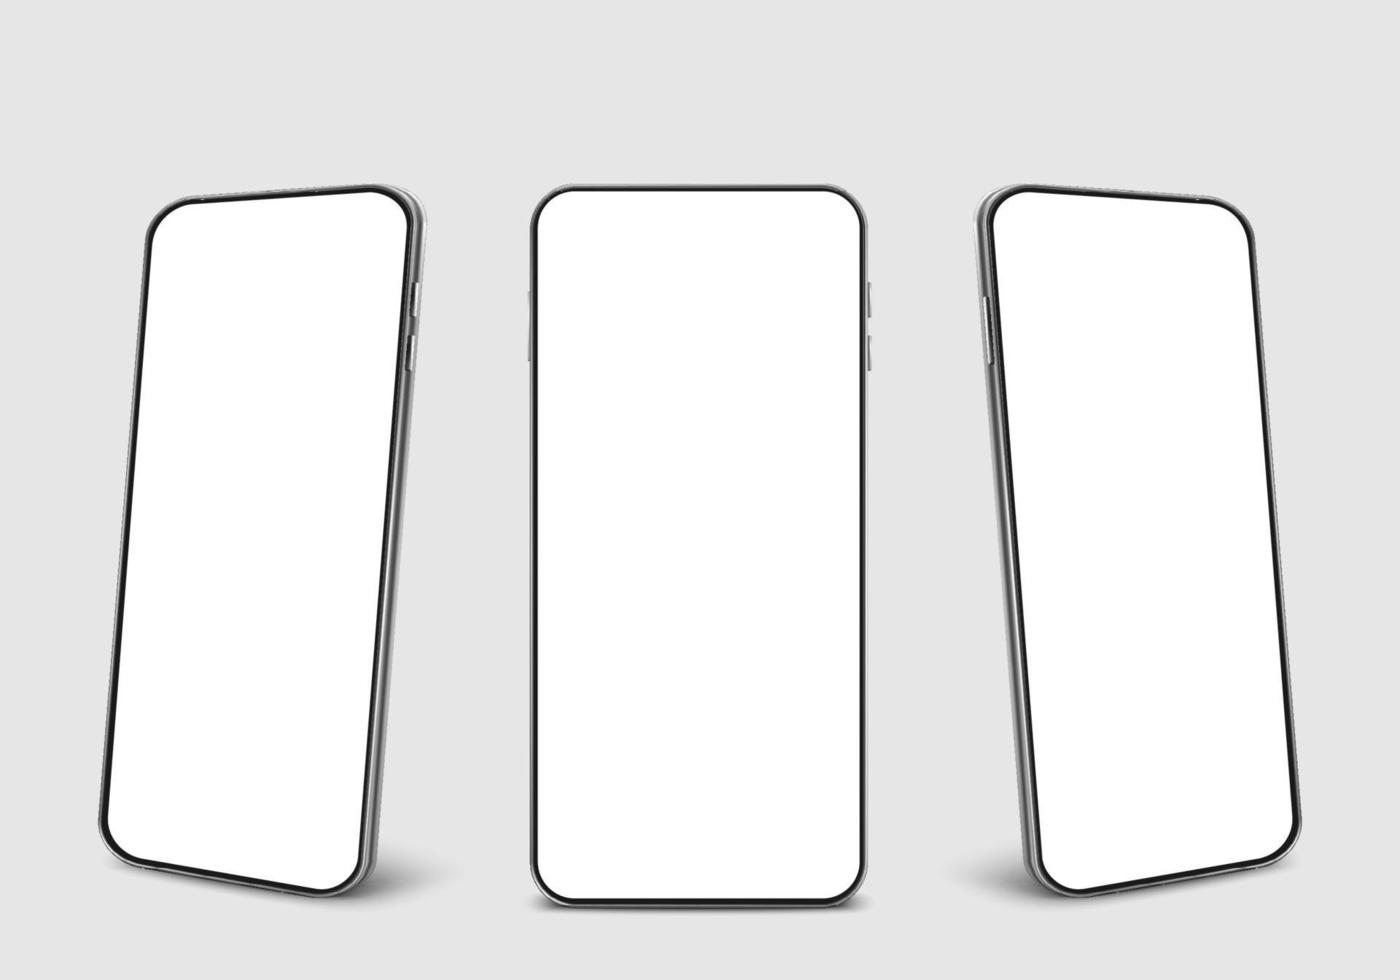 realistisk 3d svart smartphone mockup samling isolerad på bakgrunden. modern mobiltelefon samling med kopia utrymme. teknik vektor illustration